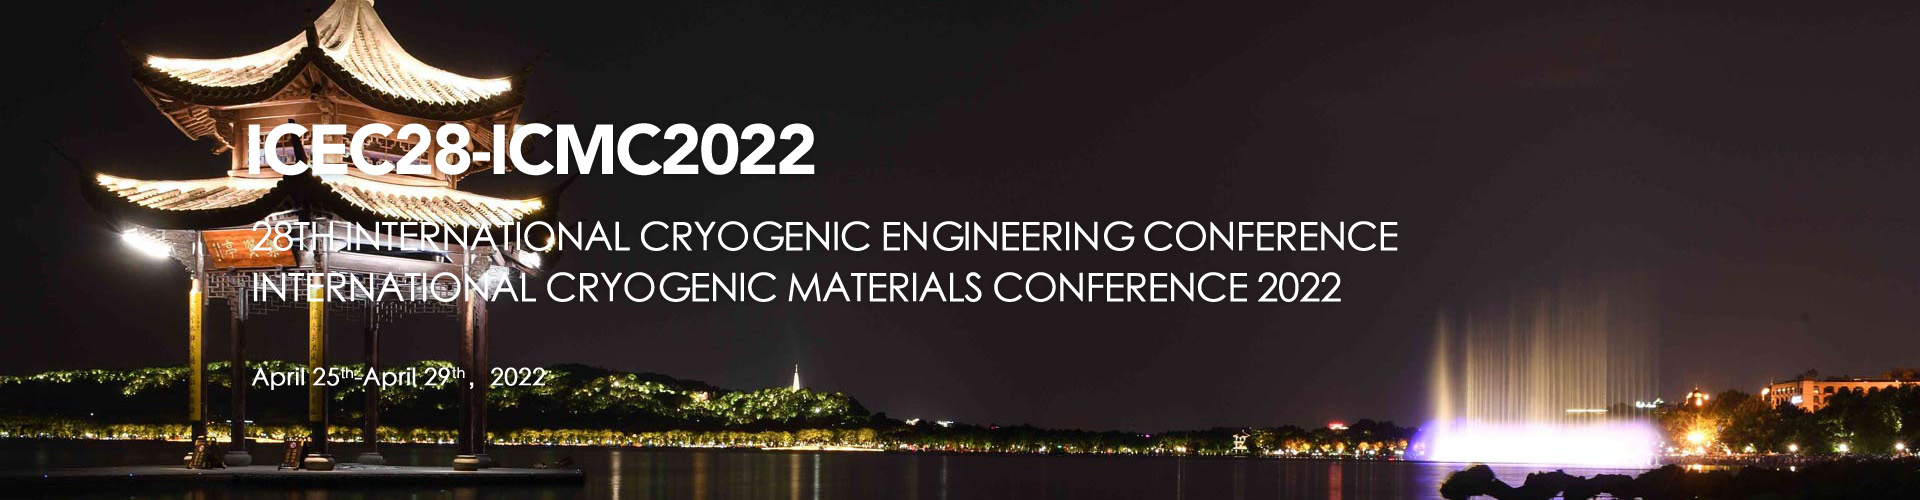 28th International Cryogenic Engineering Conference and International Cryogenic Materials Conference 2022